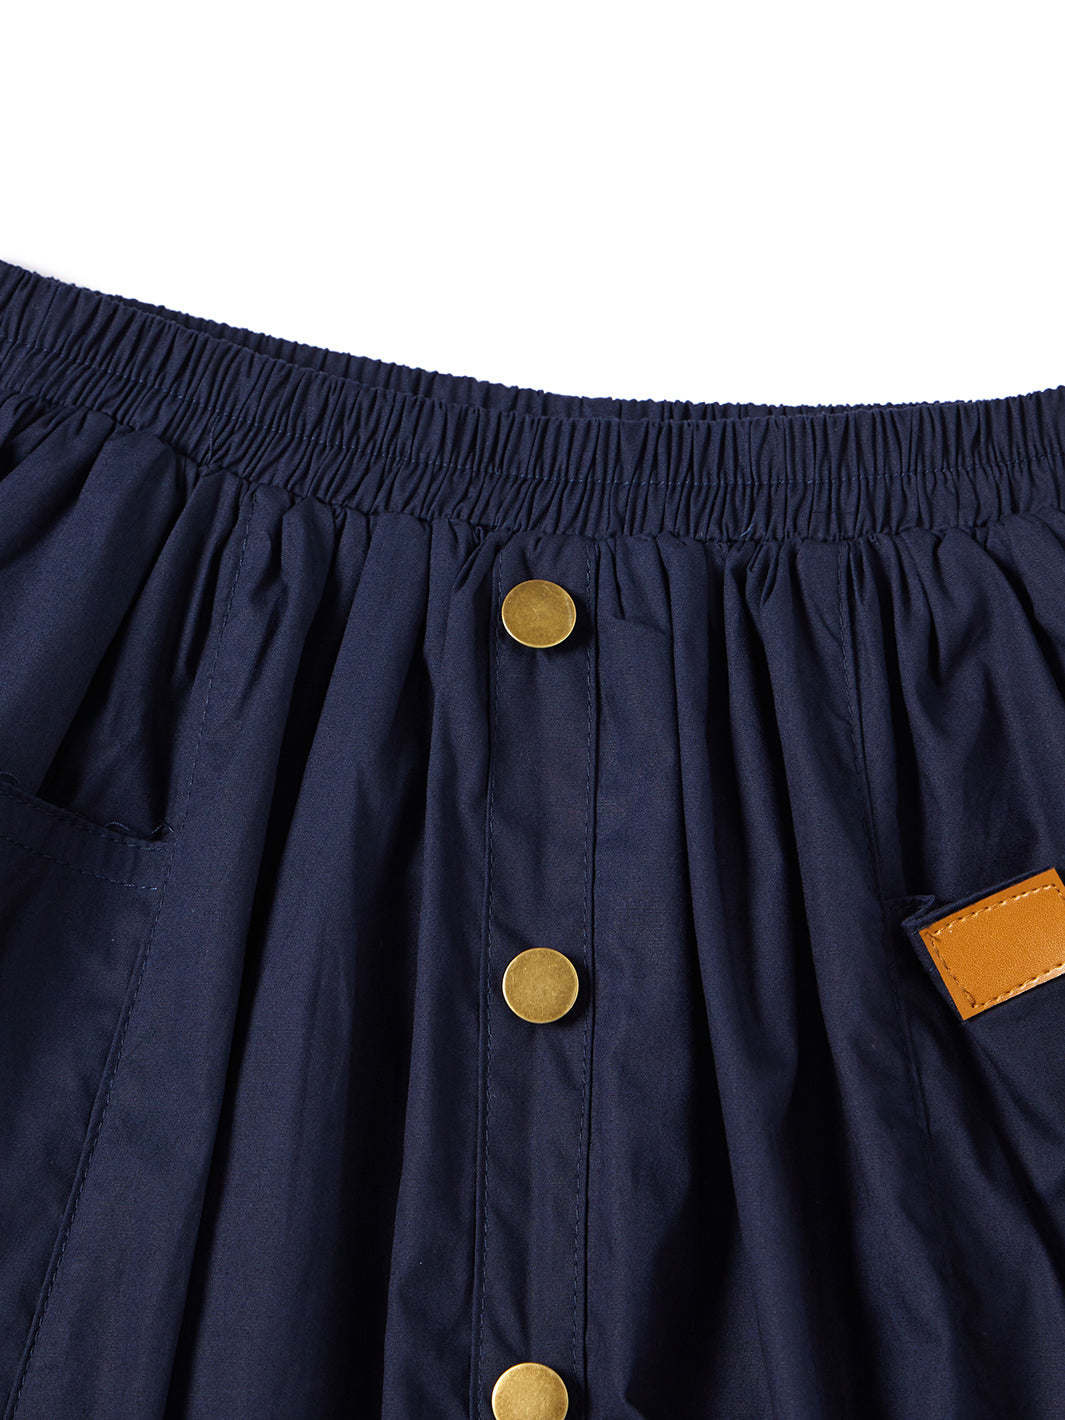 Gathers Maxi Length Skirt - Navy